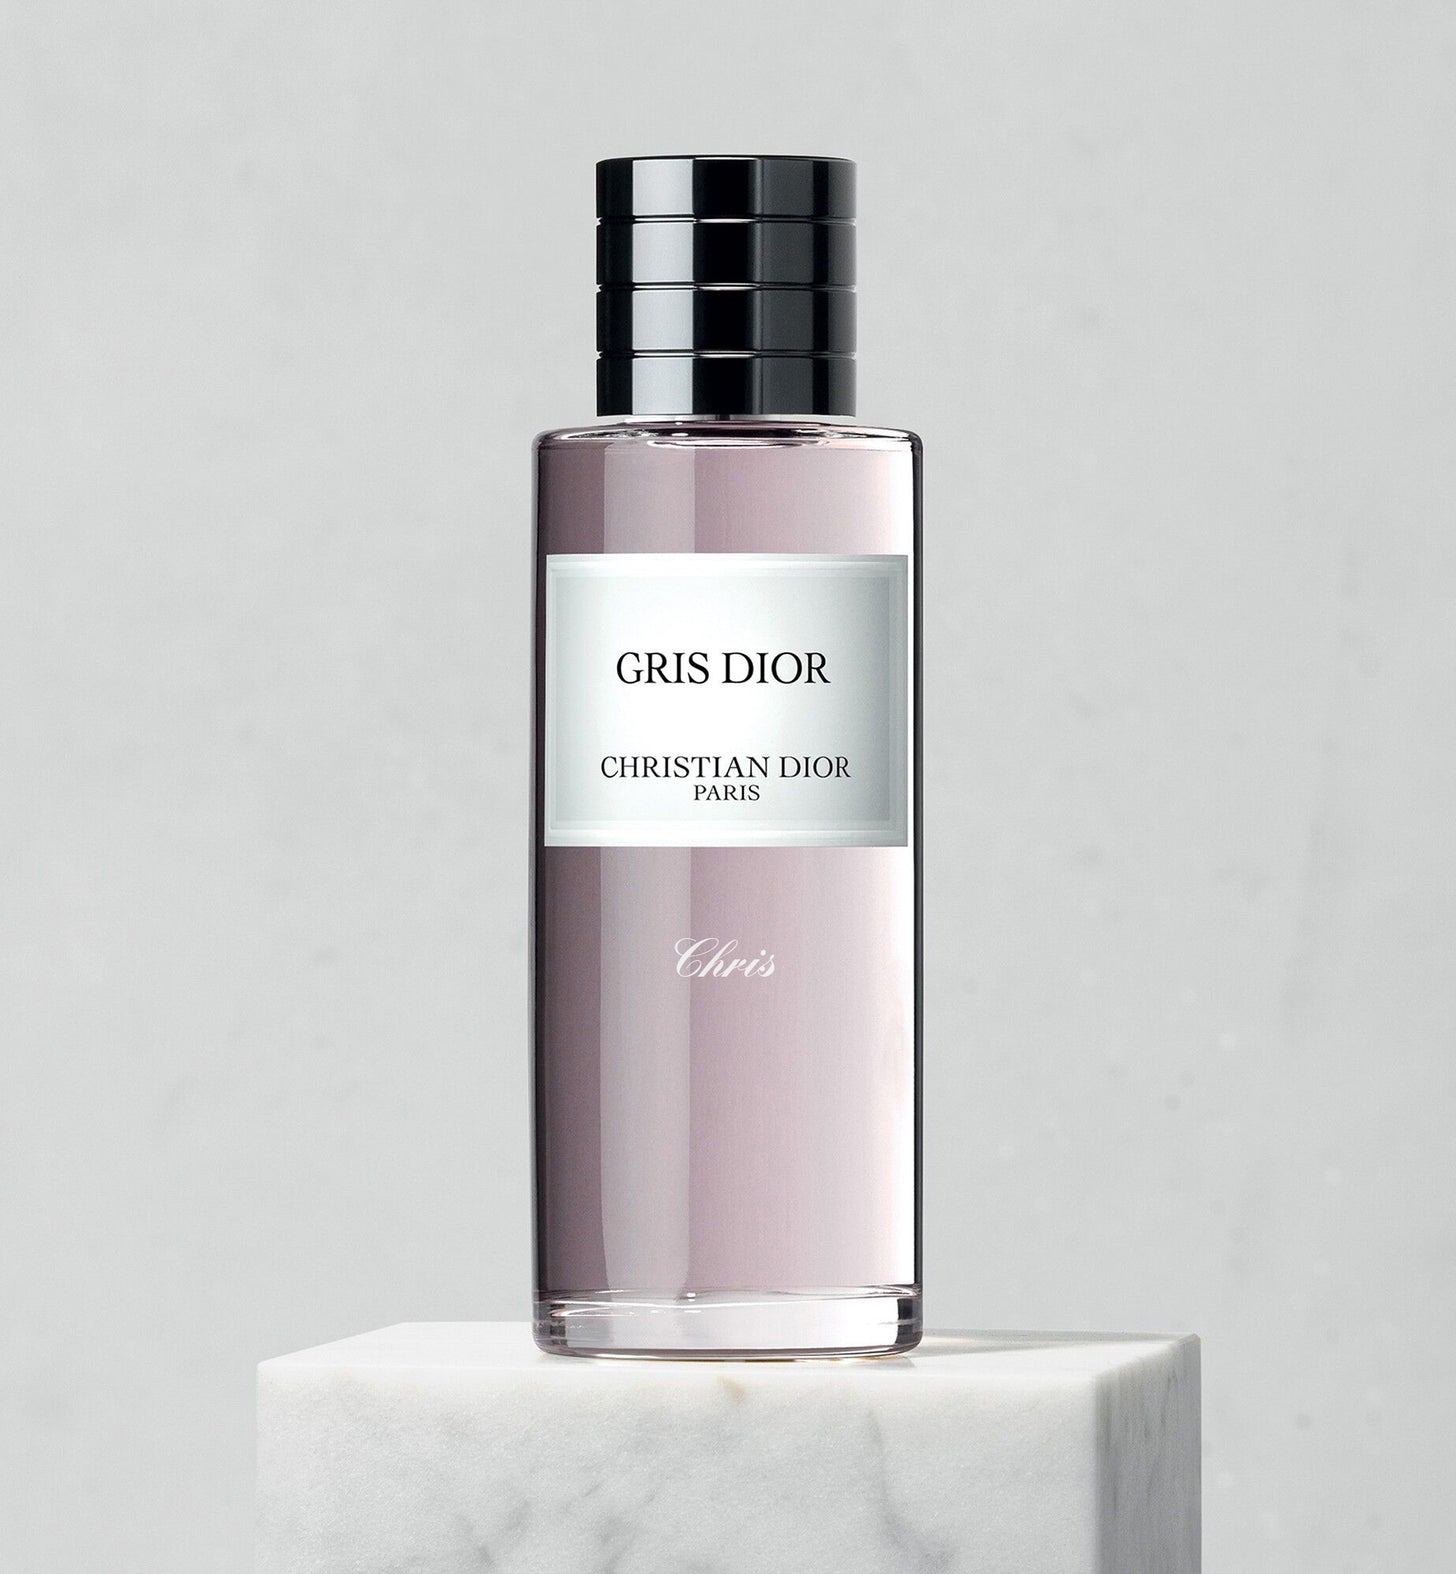 Give Personalizable Miss Dior Eau de Parfum - Holiday Gift Idea